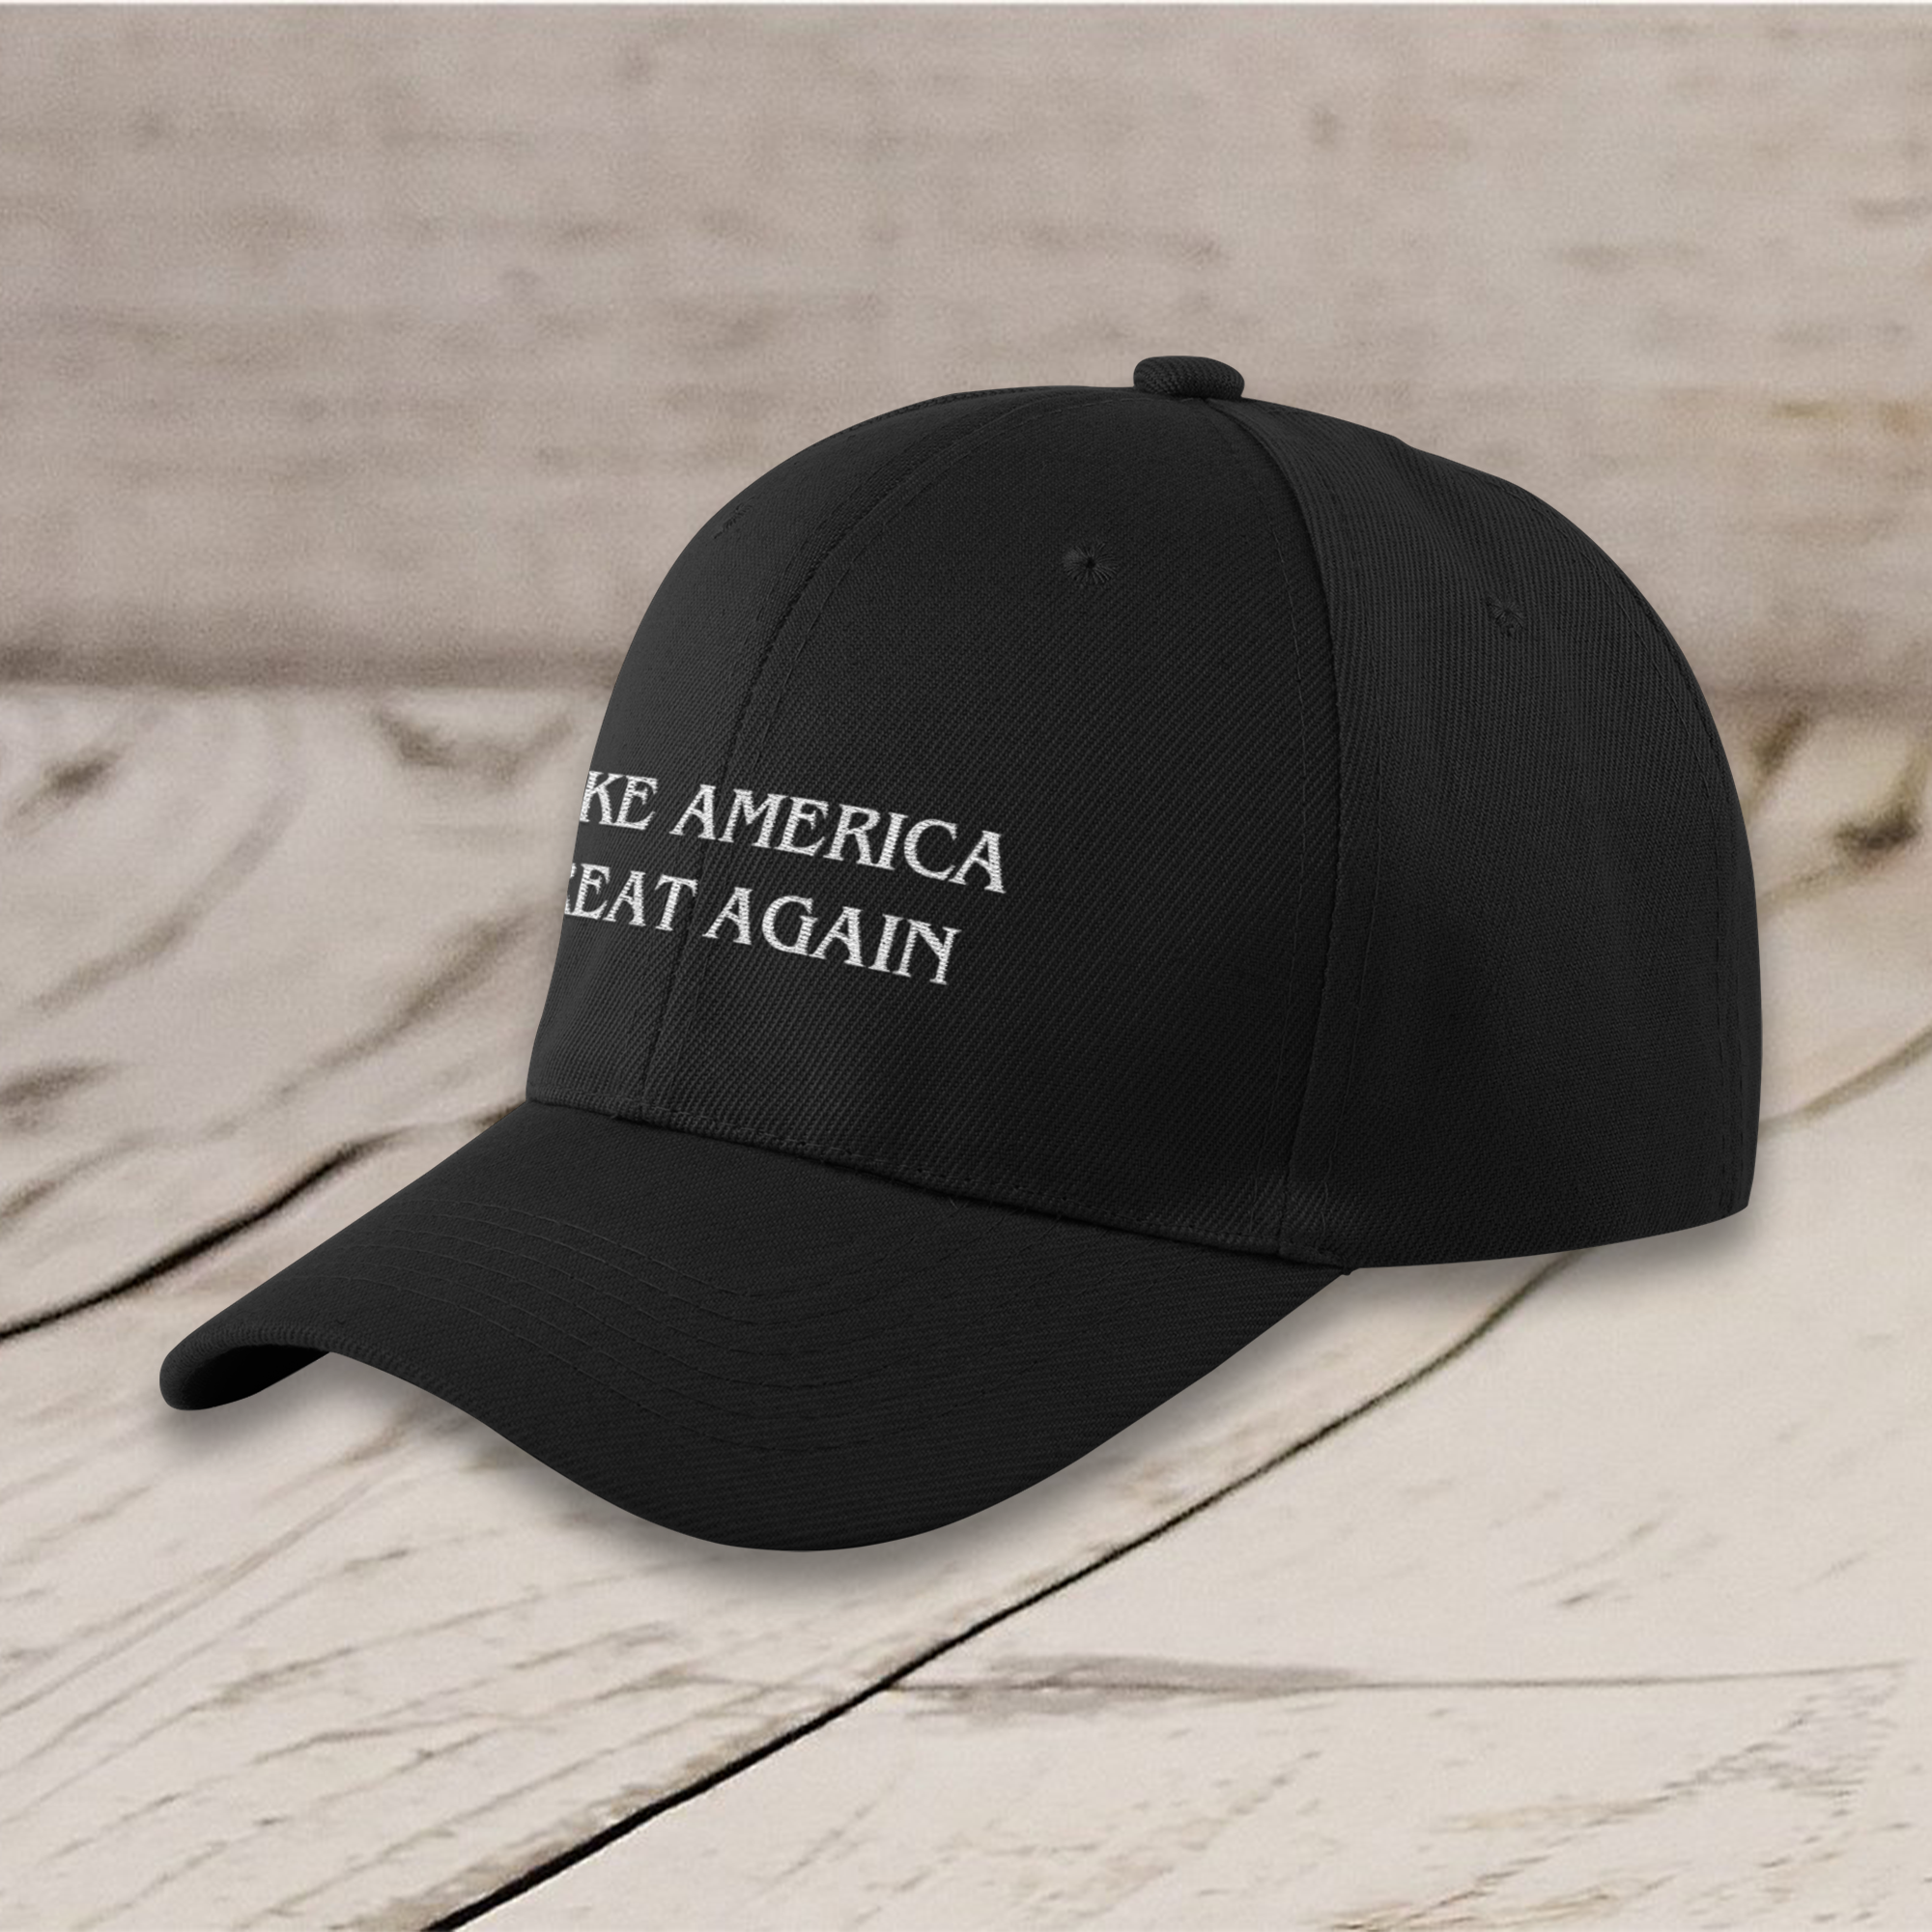 Trump Make America Great Again Embroidered Cap - GB-C03